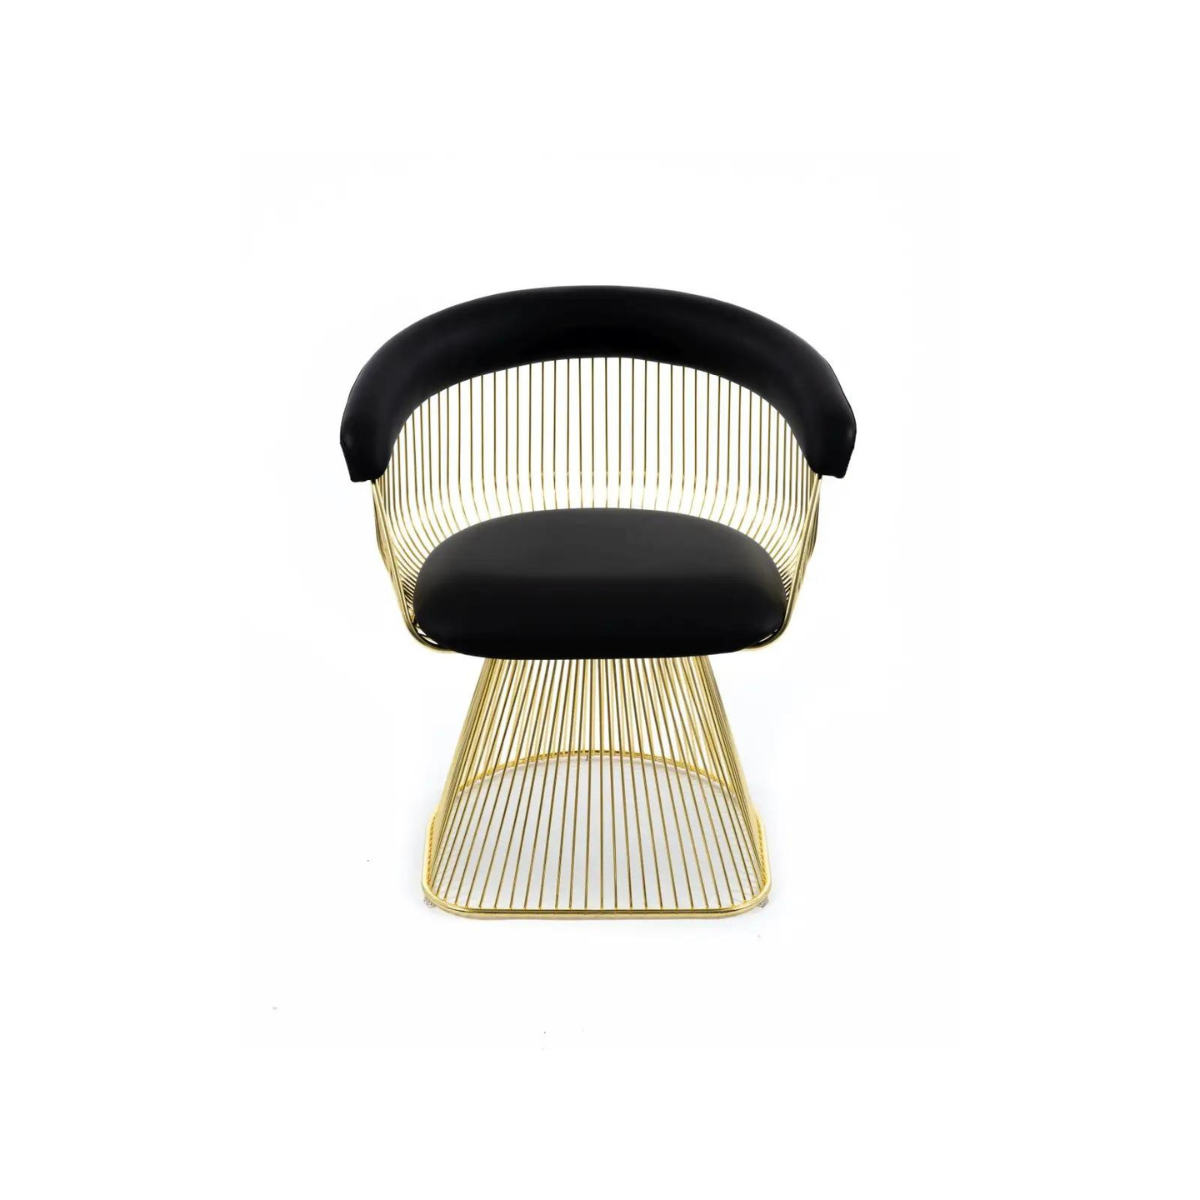 Black gold designer style armchair with modern elegance ALEXIS